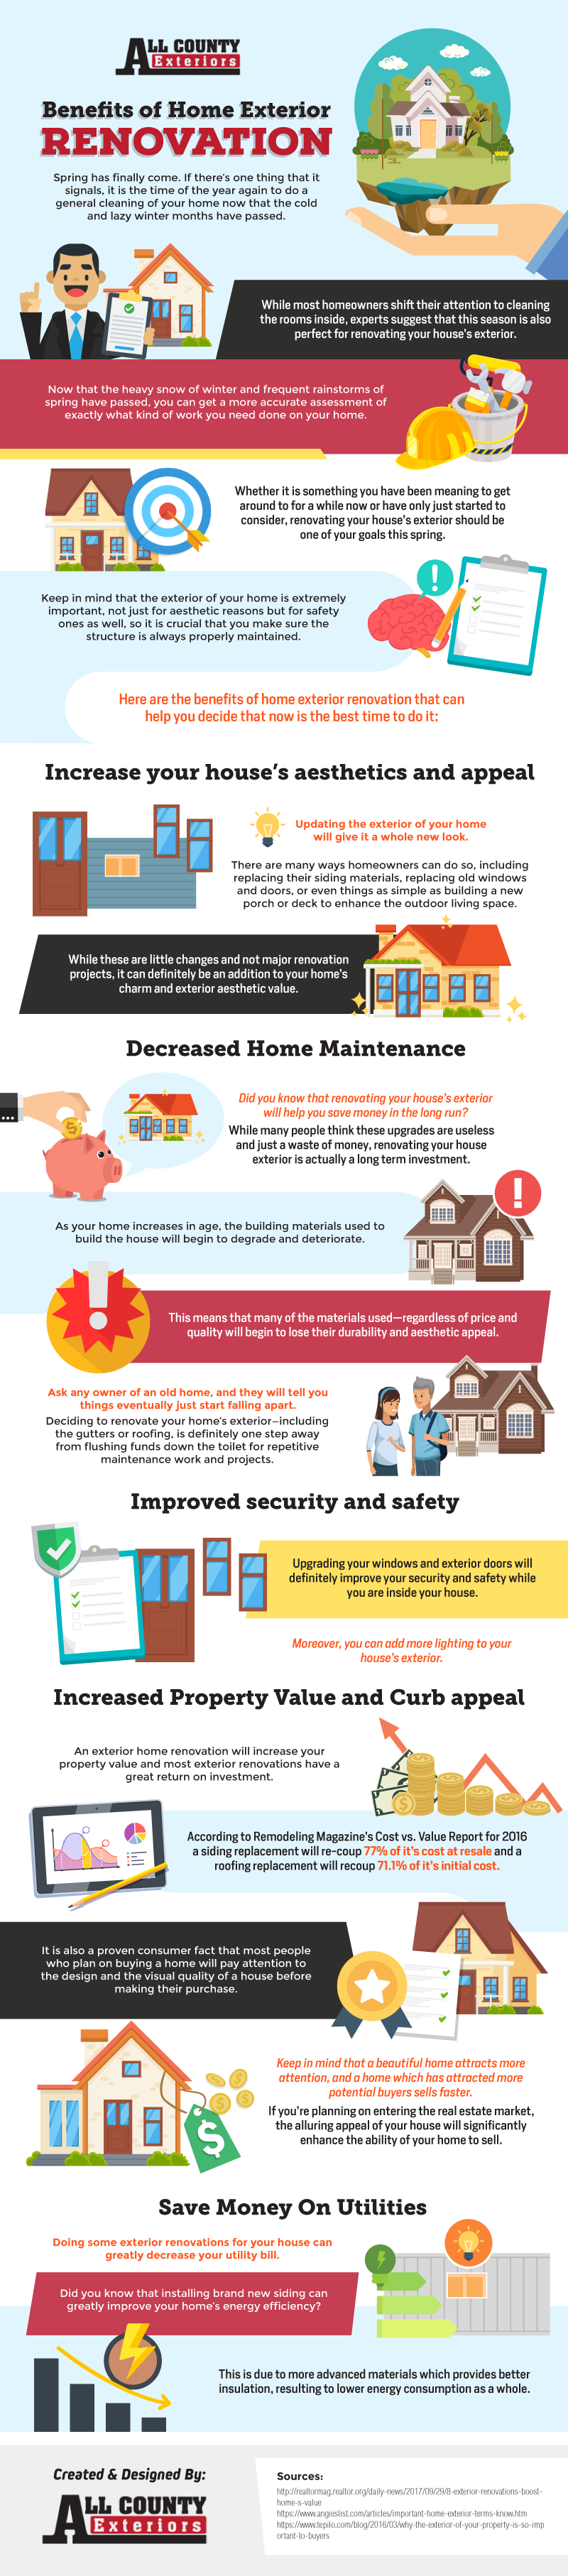 Benefits of Home Exterior Renovation